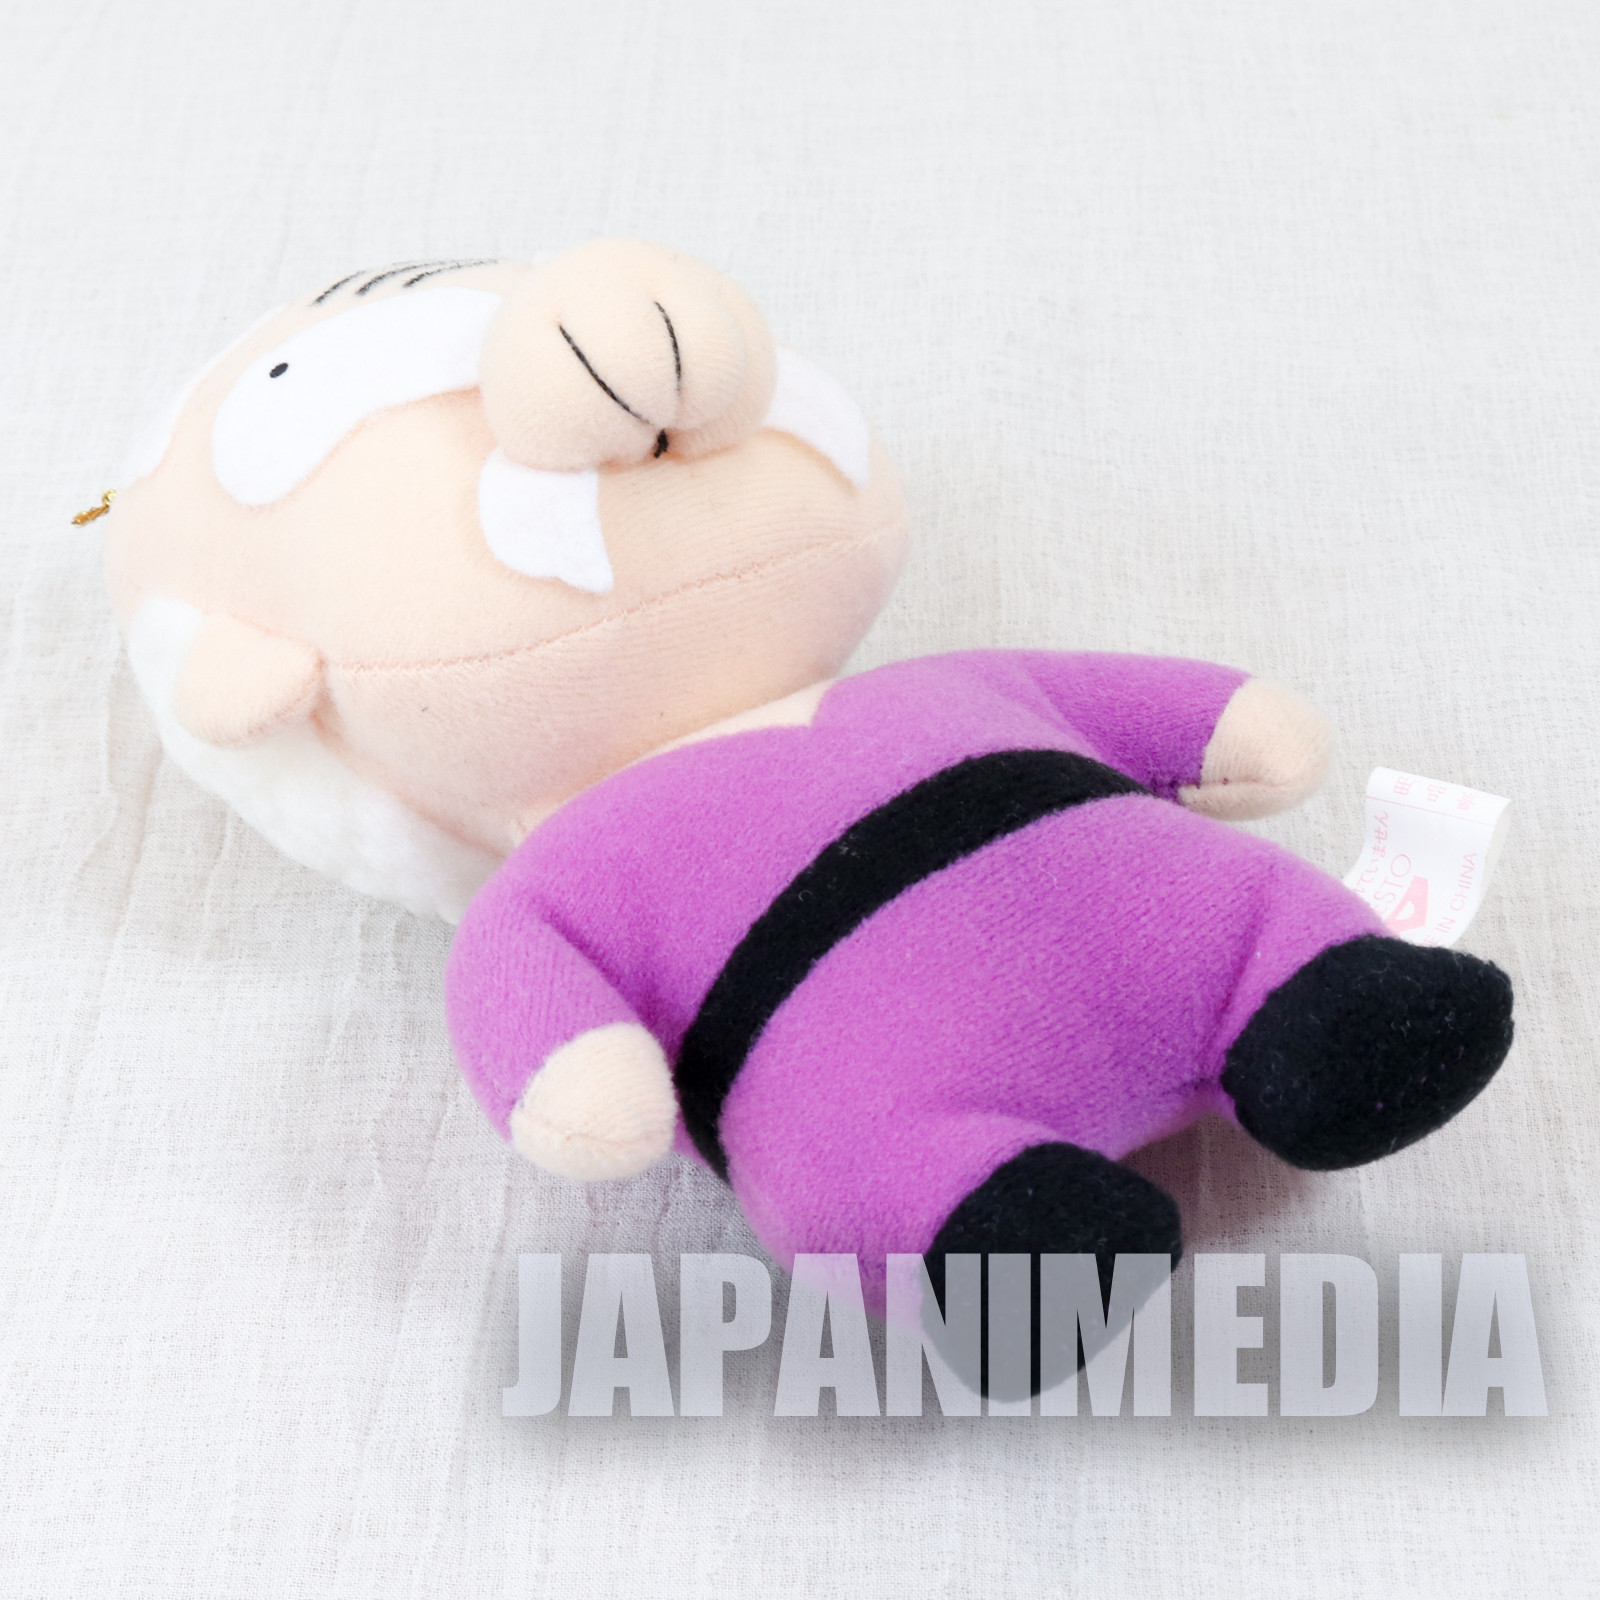 Ranma 1/2 Happosai 6" Plush Doll Banpresto JAPAN ANIME MANGA FIGURE